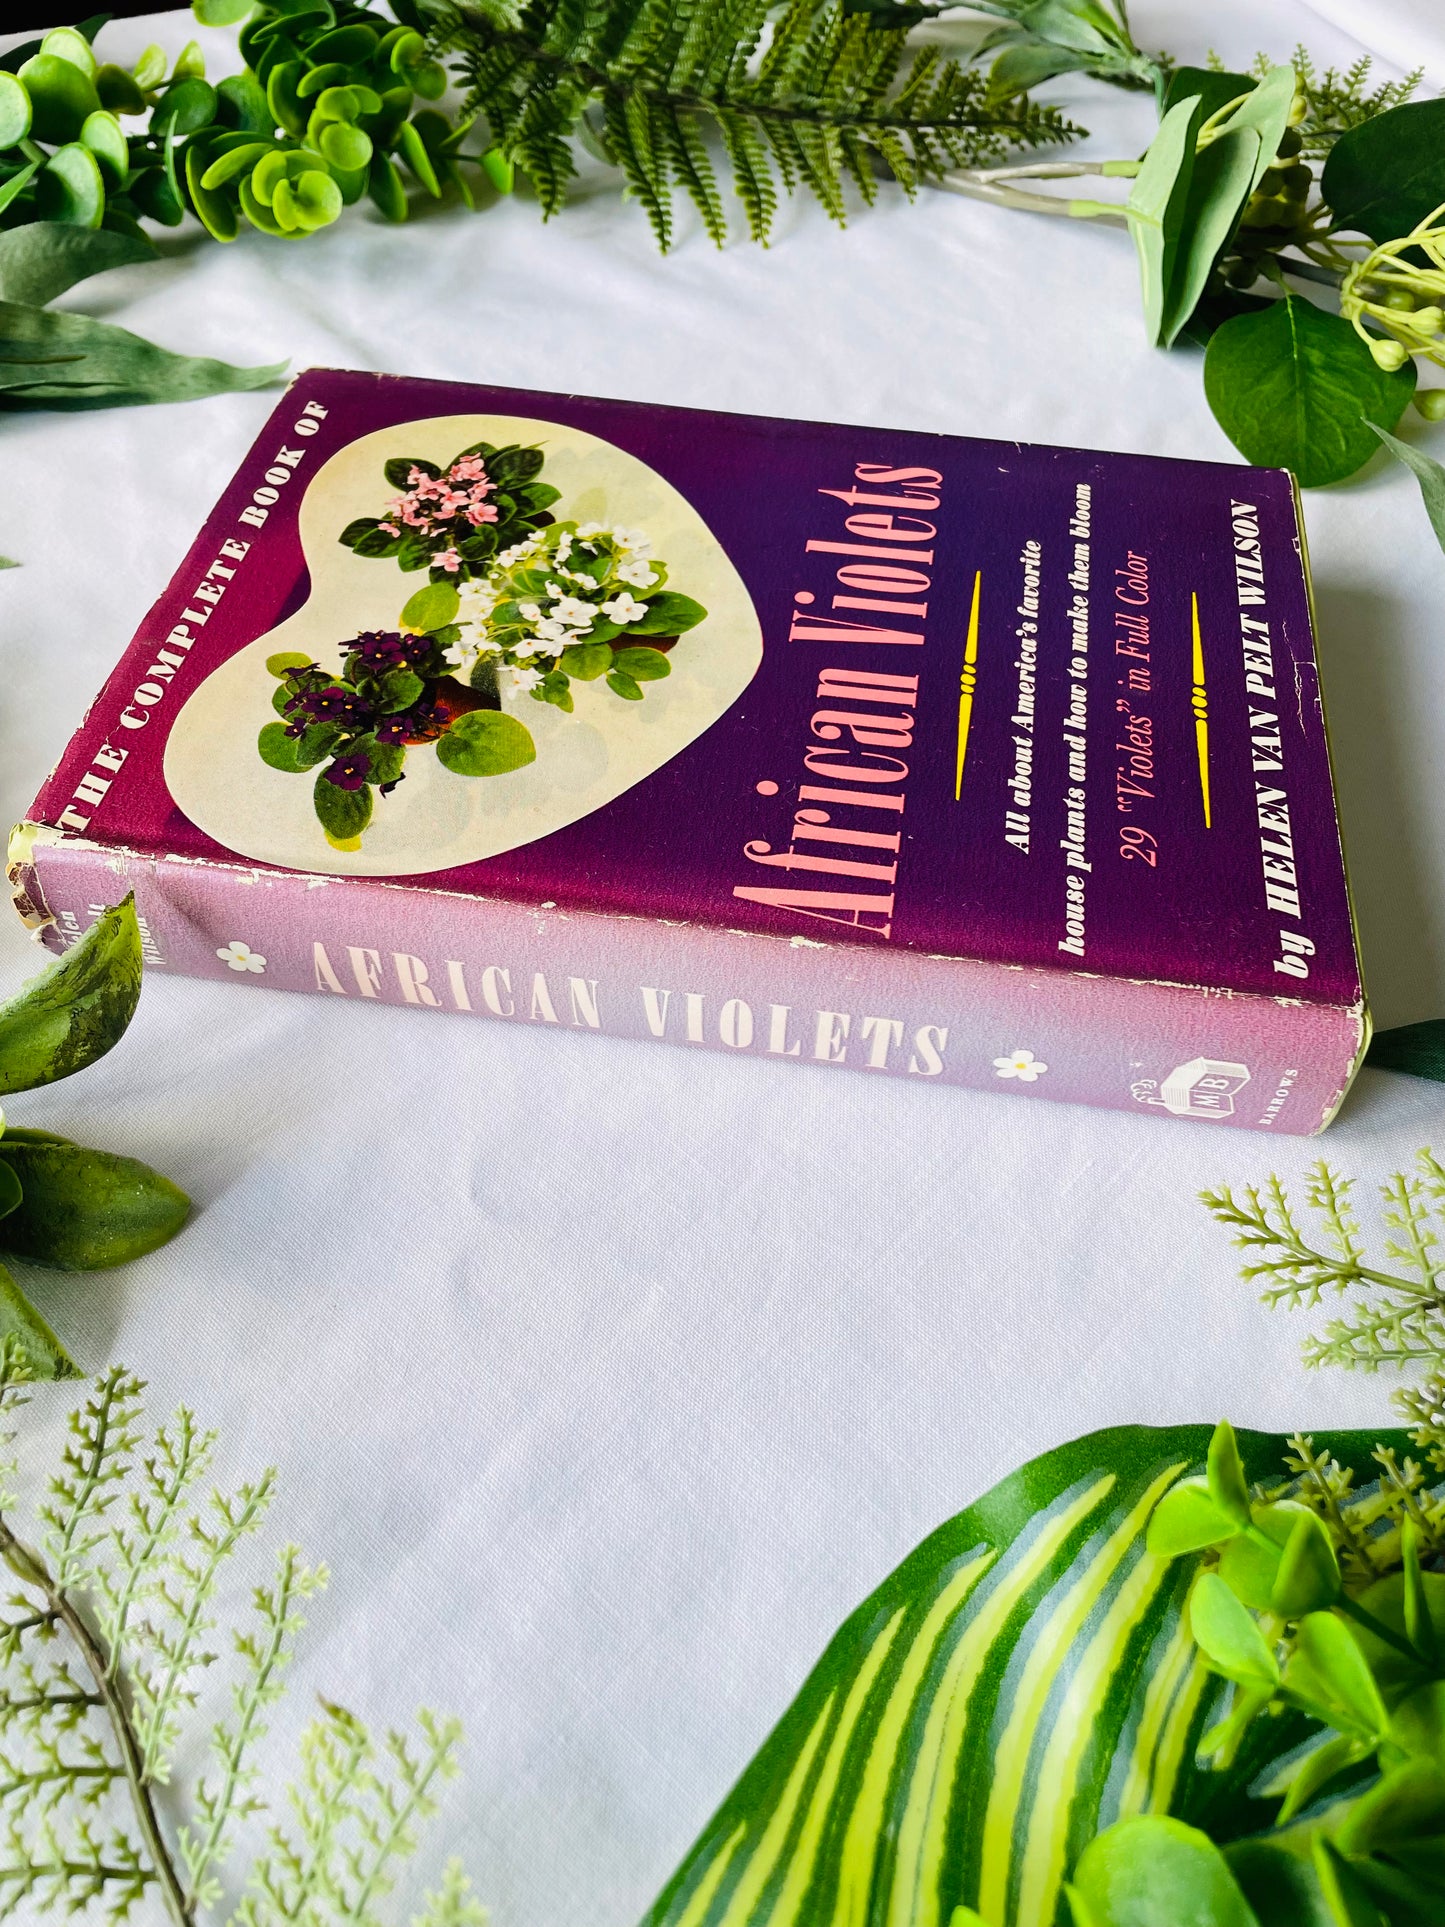 African Violets Hardcover Book by Helen Van Pelt Wilson (1952)